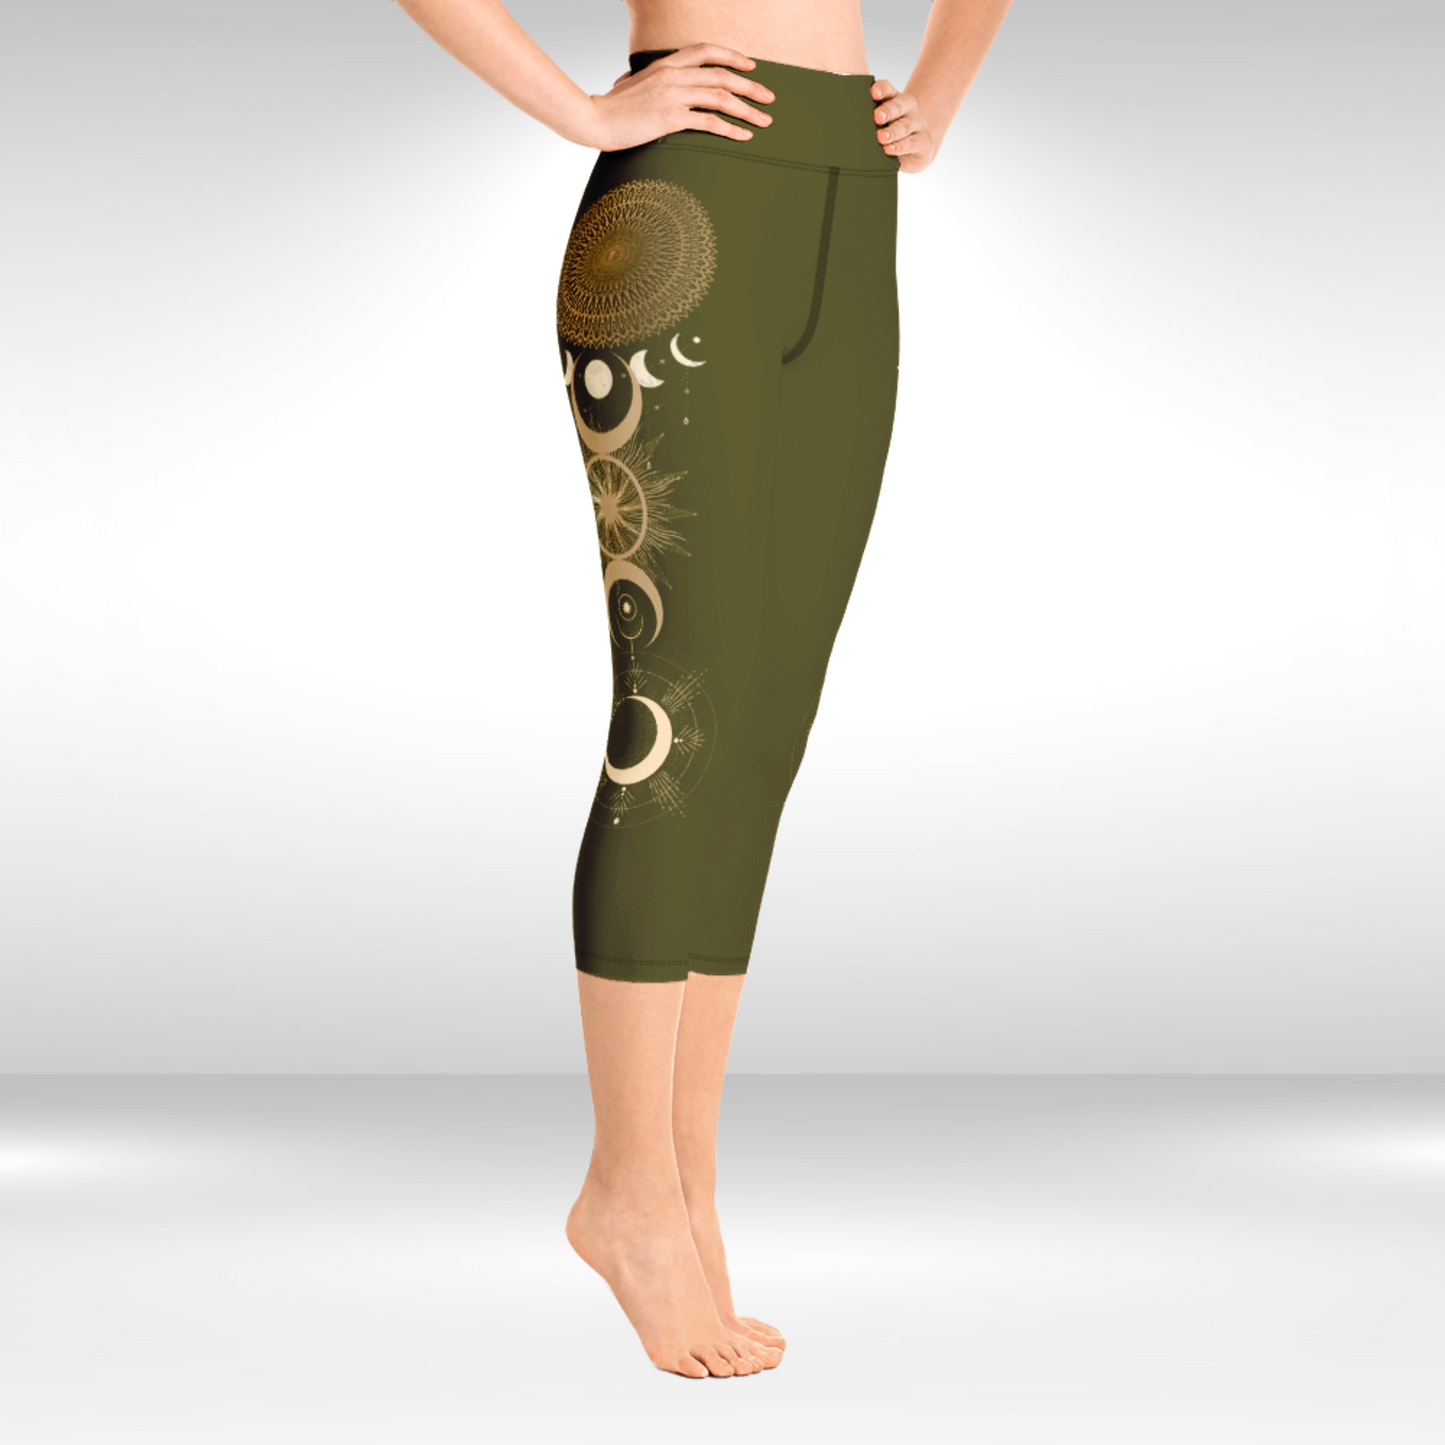 Women Yoga Capri Legging - Henna and Gold Moon Mandala Print